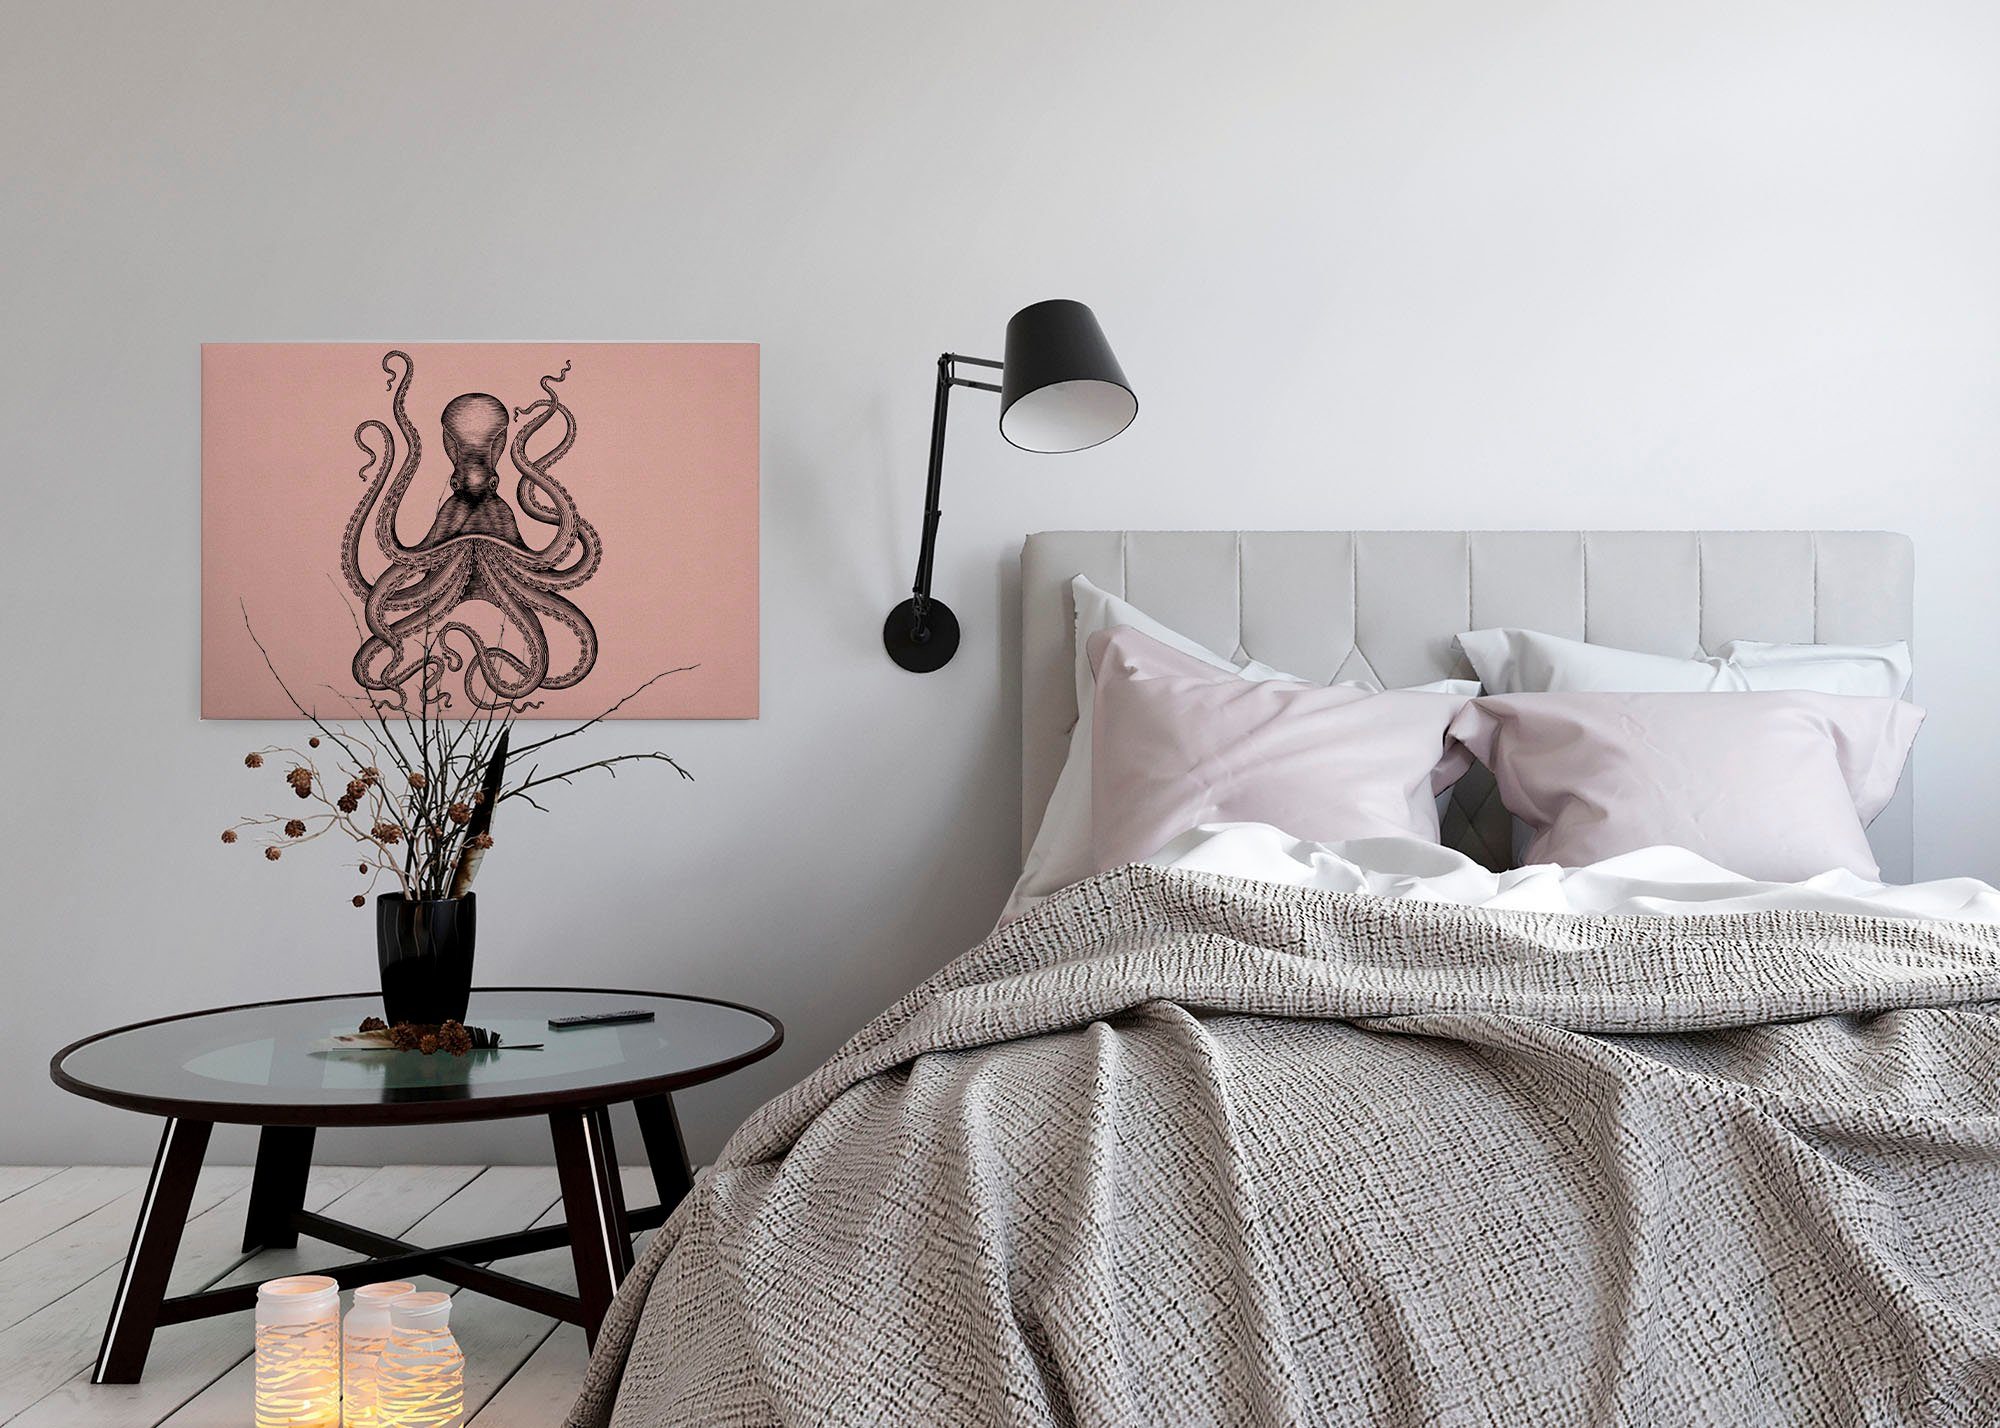 Octopus Krake Création schwarz Bild grau, Tiere Keilrahmen jules, St), Leinwandbild rosa, A.S. (1